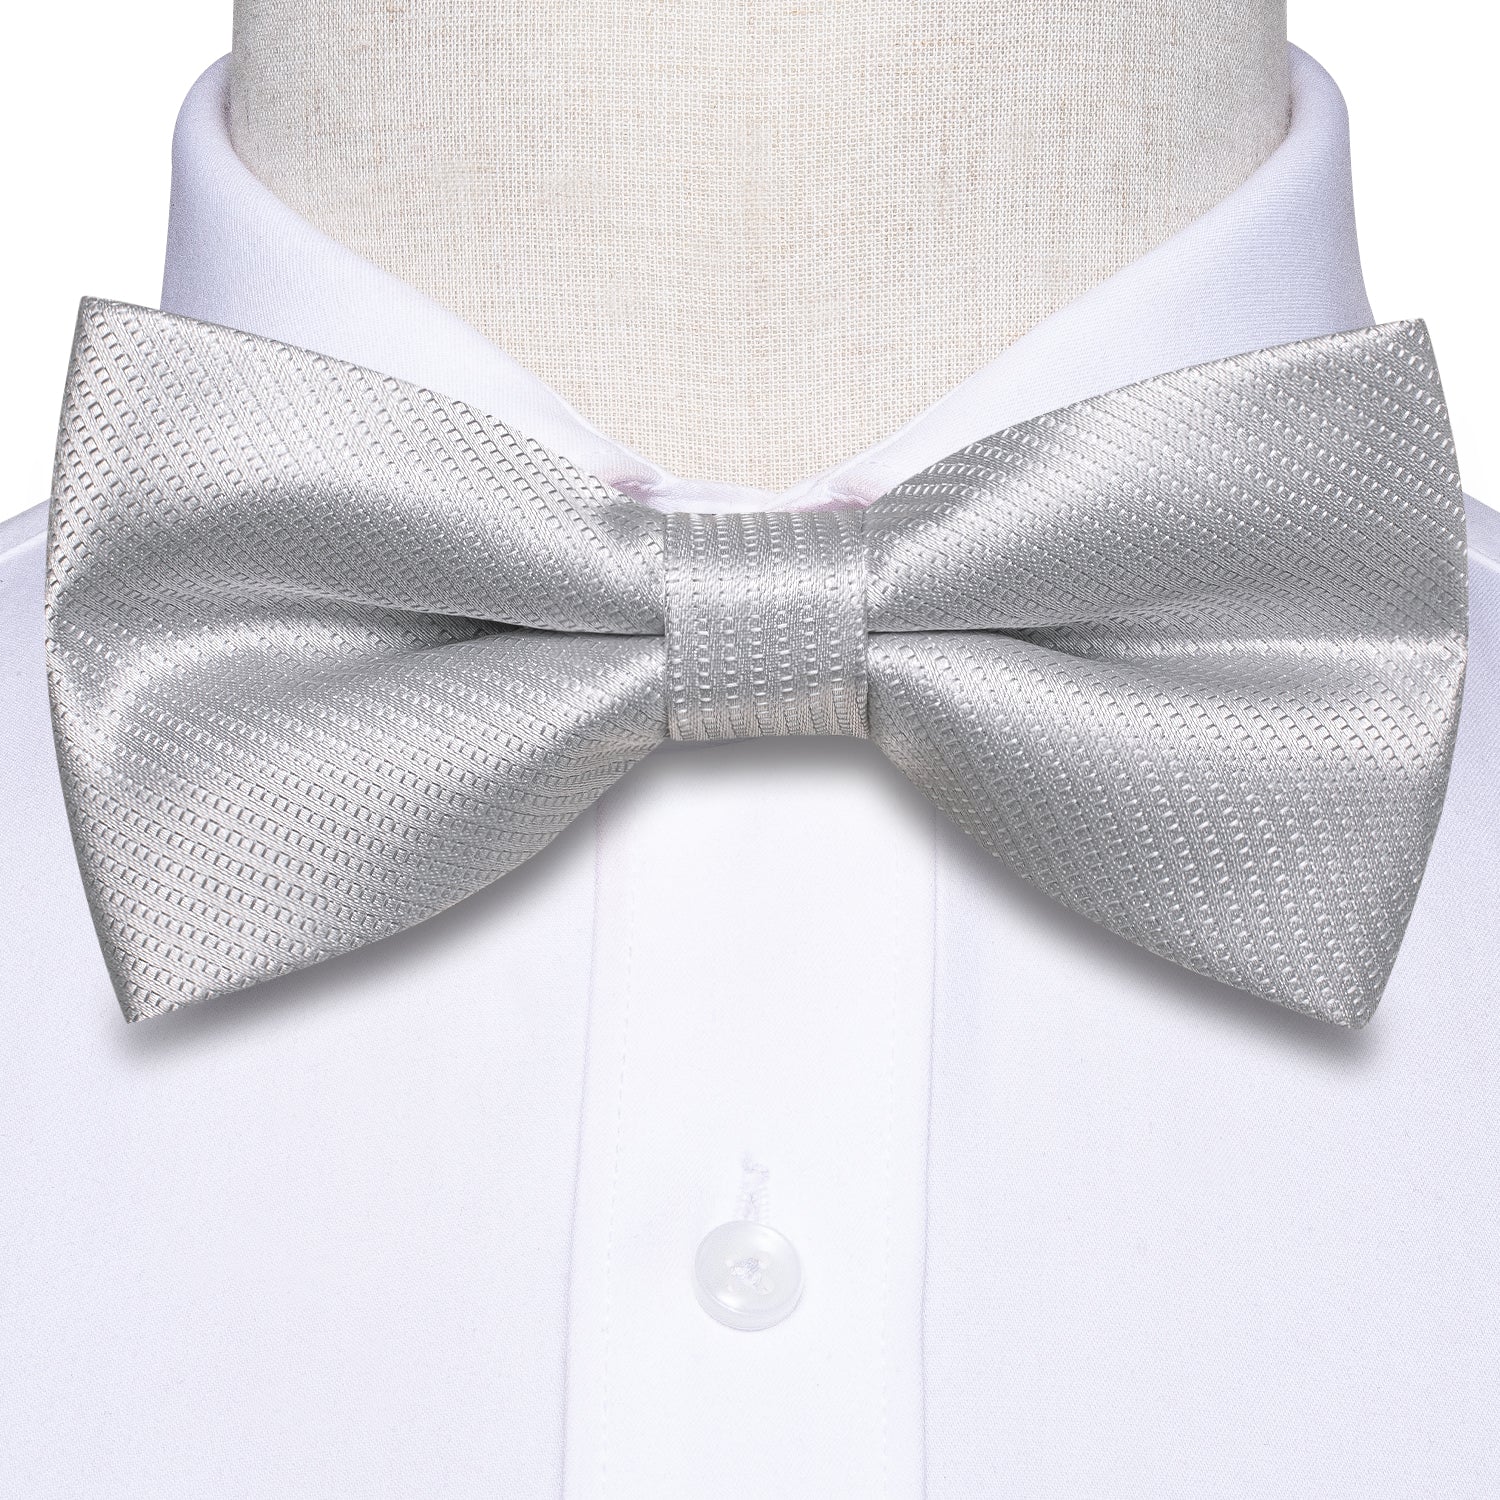 New Silver Striped Pre-tied Bow Tie Hanky Cufflinks Set